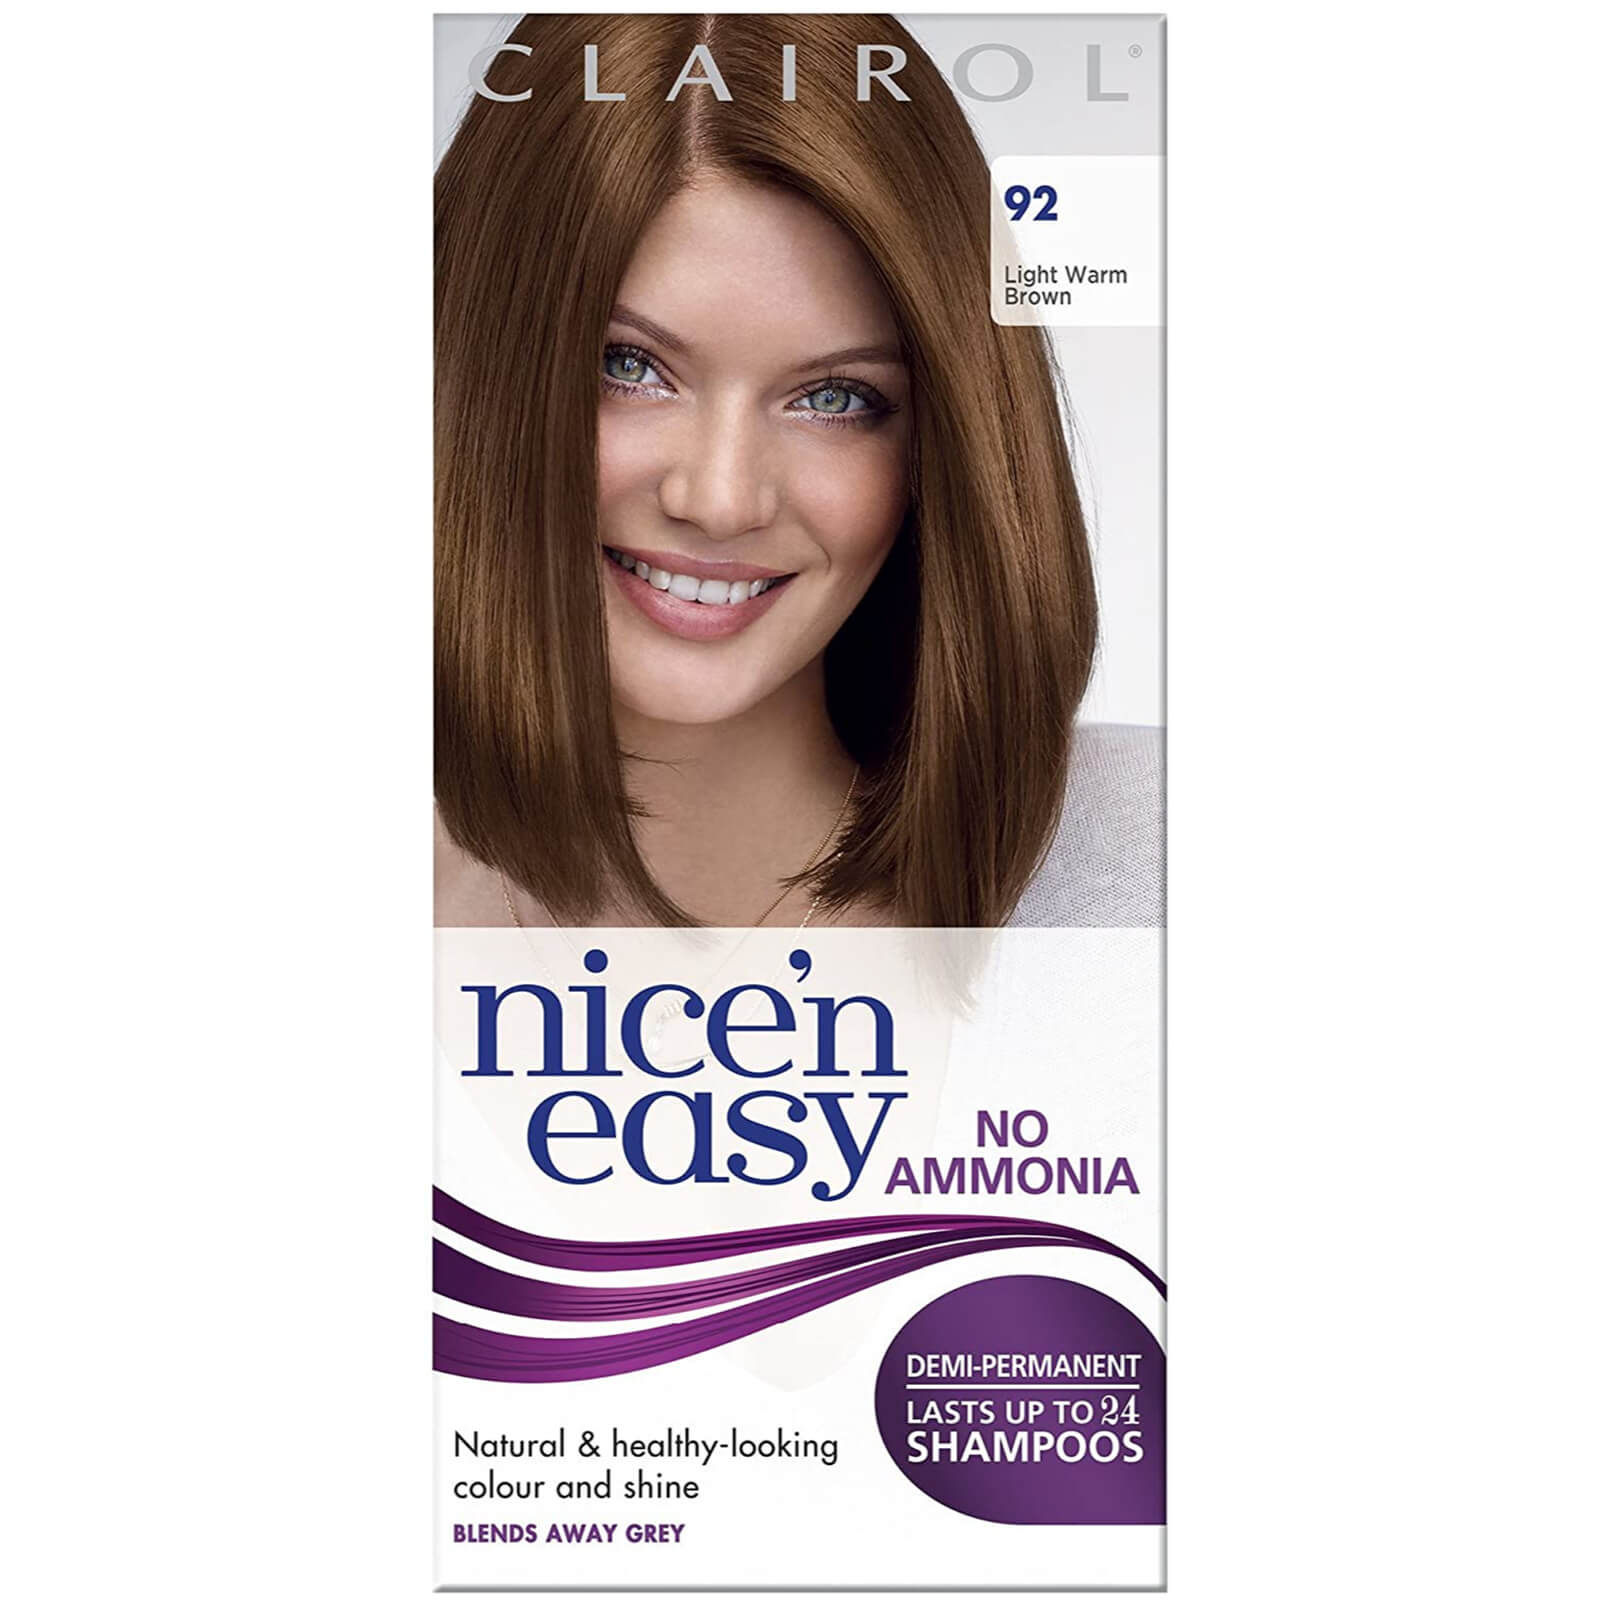 Clairol Nice'n Easy Semi-Permanent Hair Dye with No Ammonia (Various Shades) - 92 Light Warm Brown